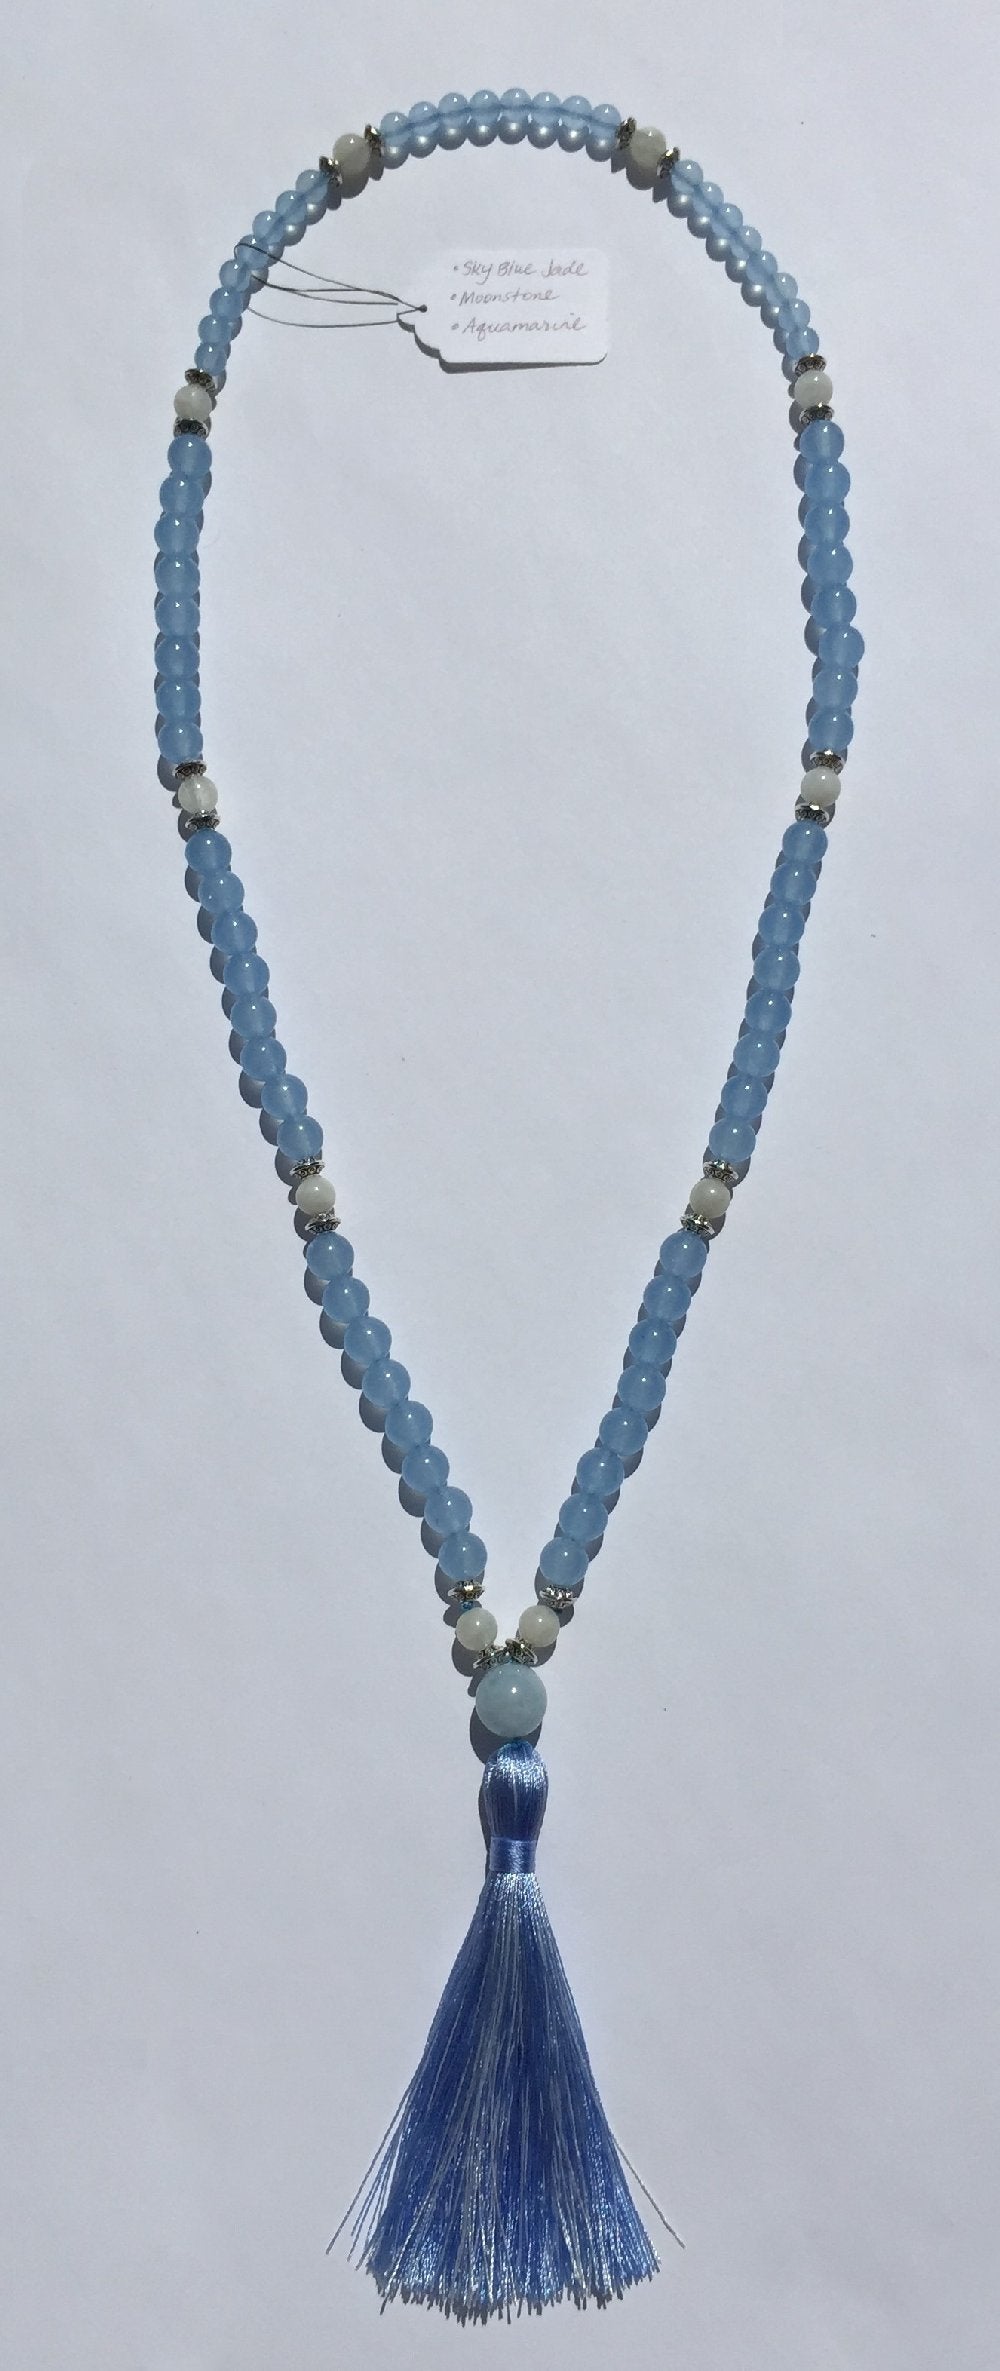 Blue & White 3s Necklace* (Sky Blue Jade, Moonstone, Aquamarine)